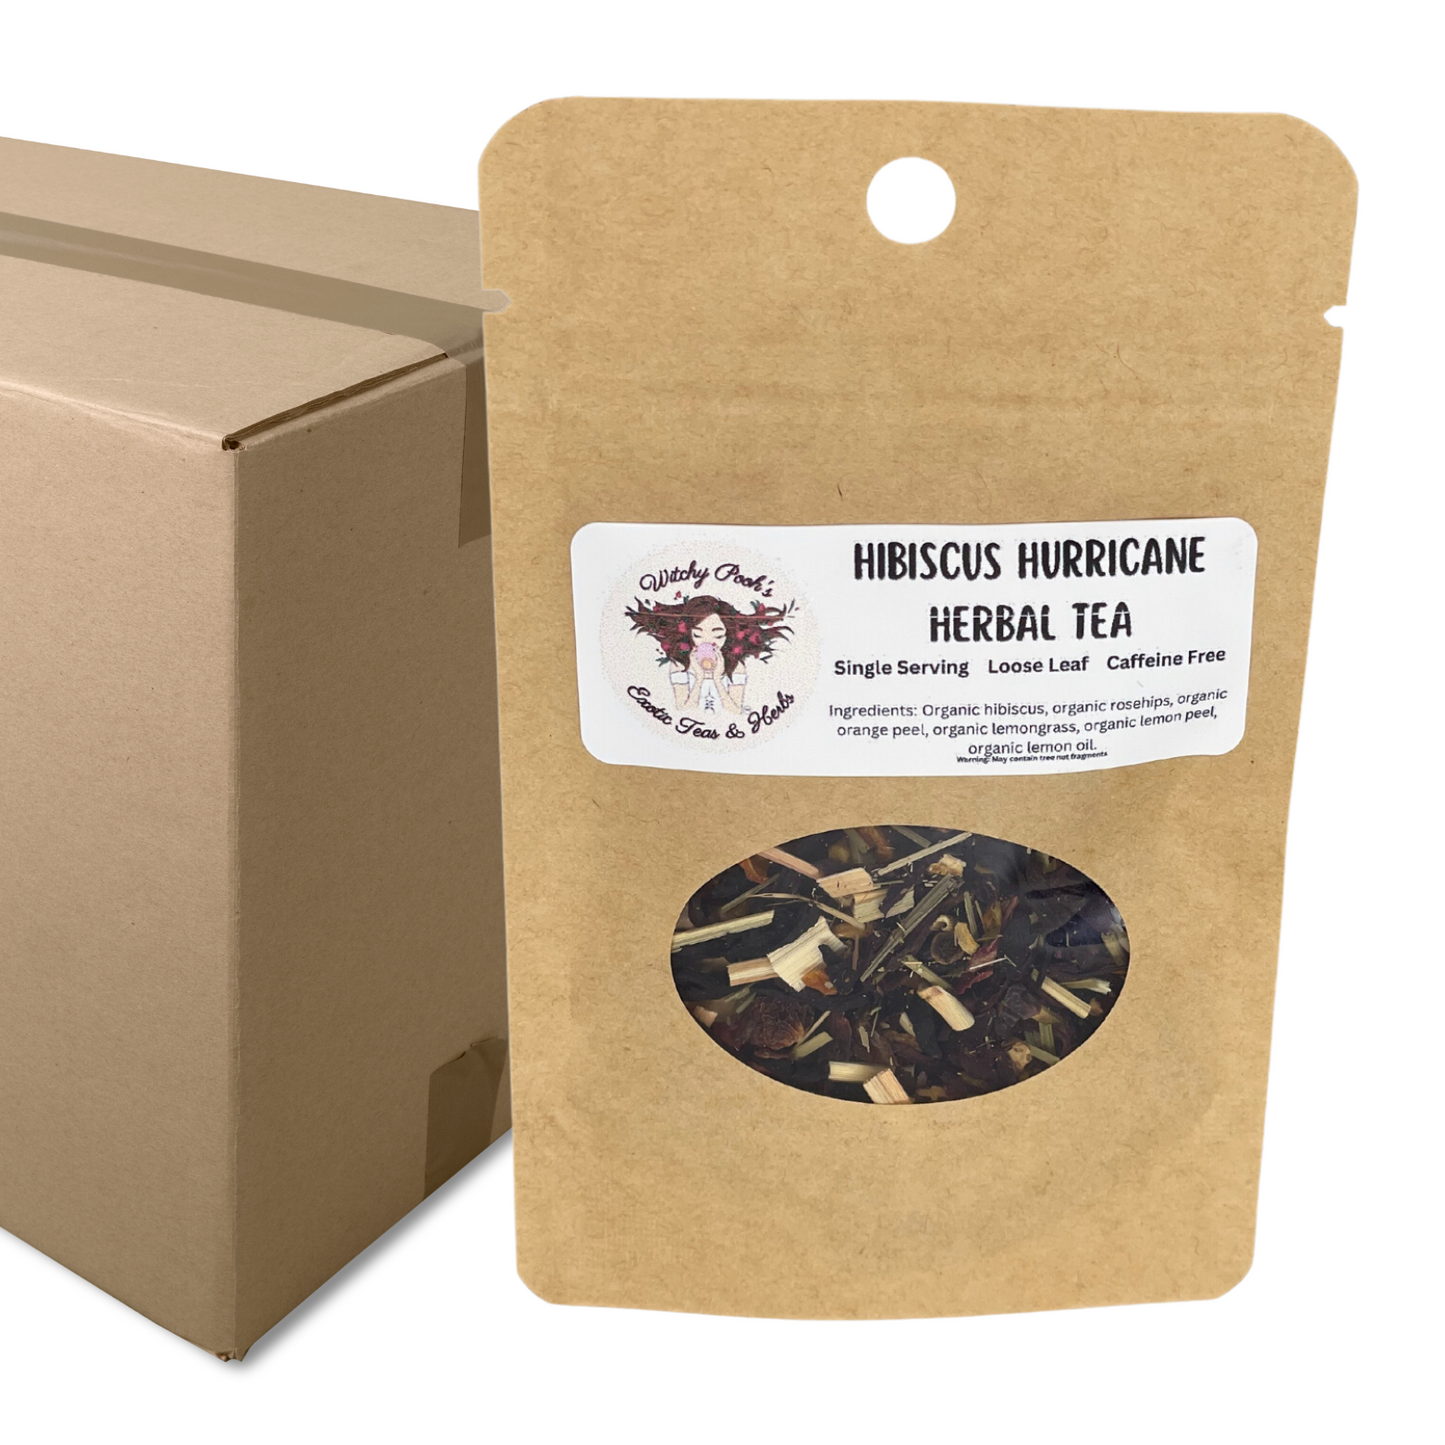 Witchy Pooh's Hibiscus Hurricane Organic Loose Leaf Herbal Fruit Tea, Caffeine Free